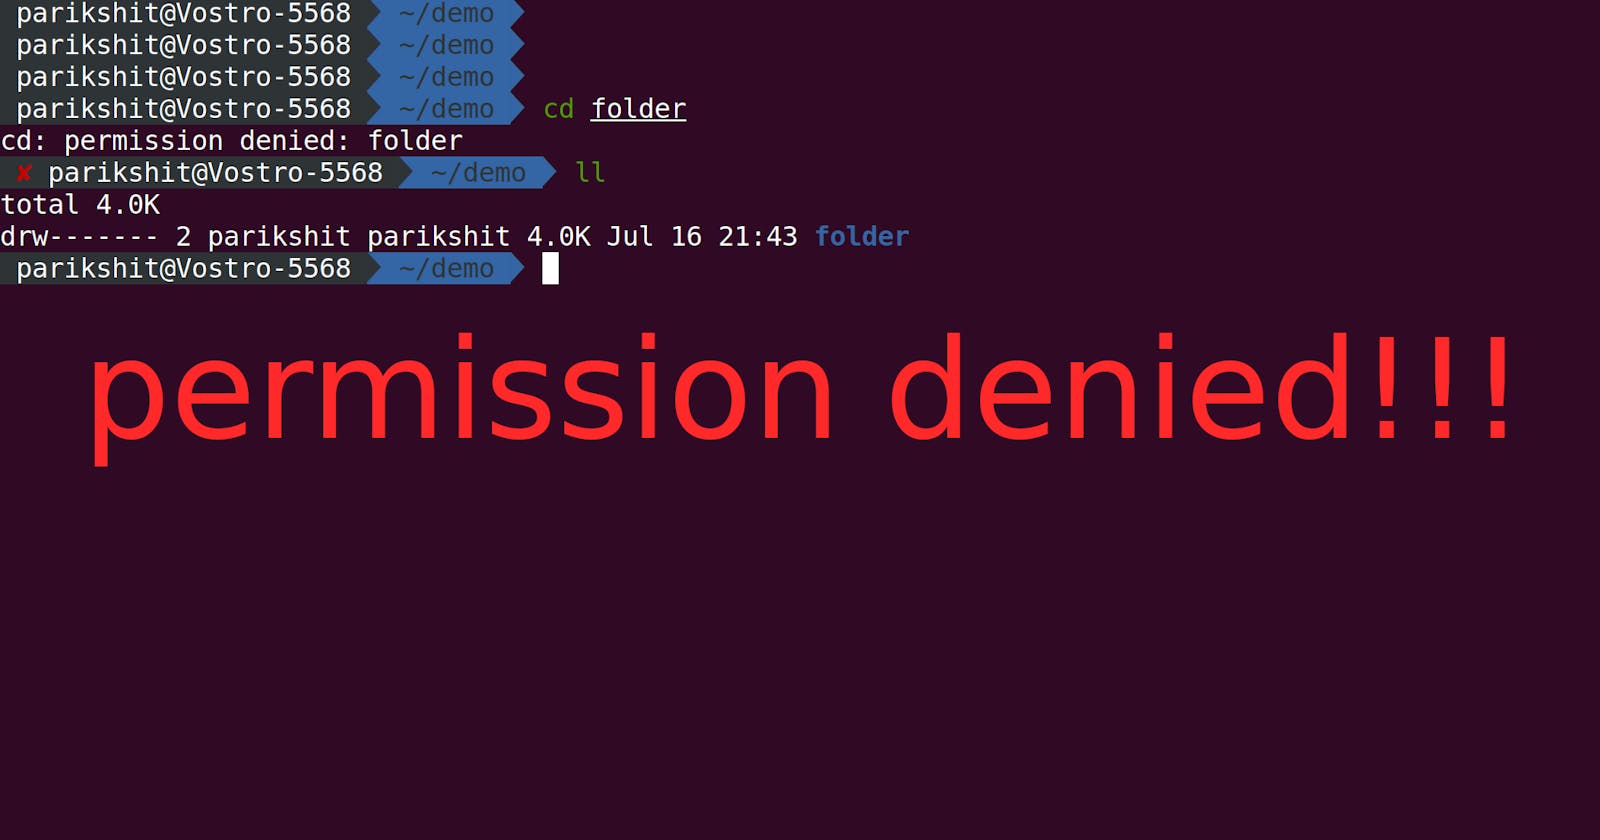 File Permissions using Linux Commands